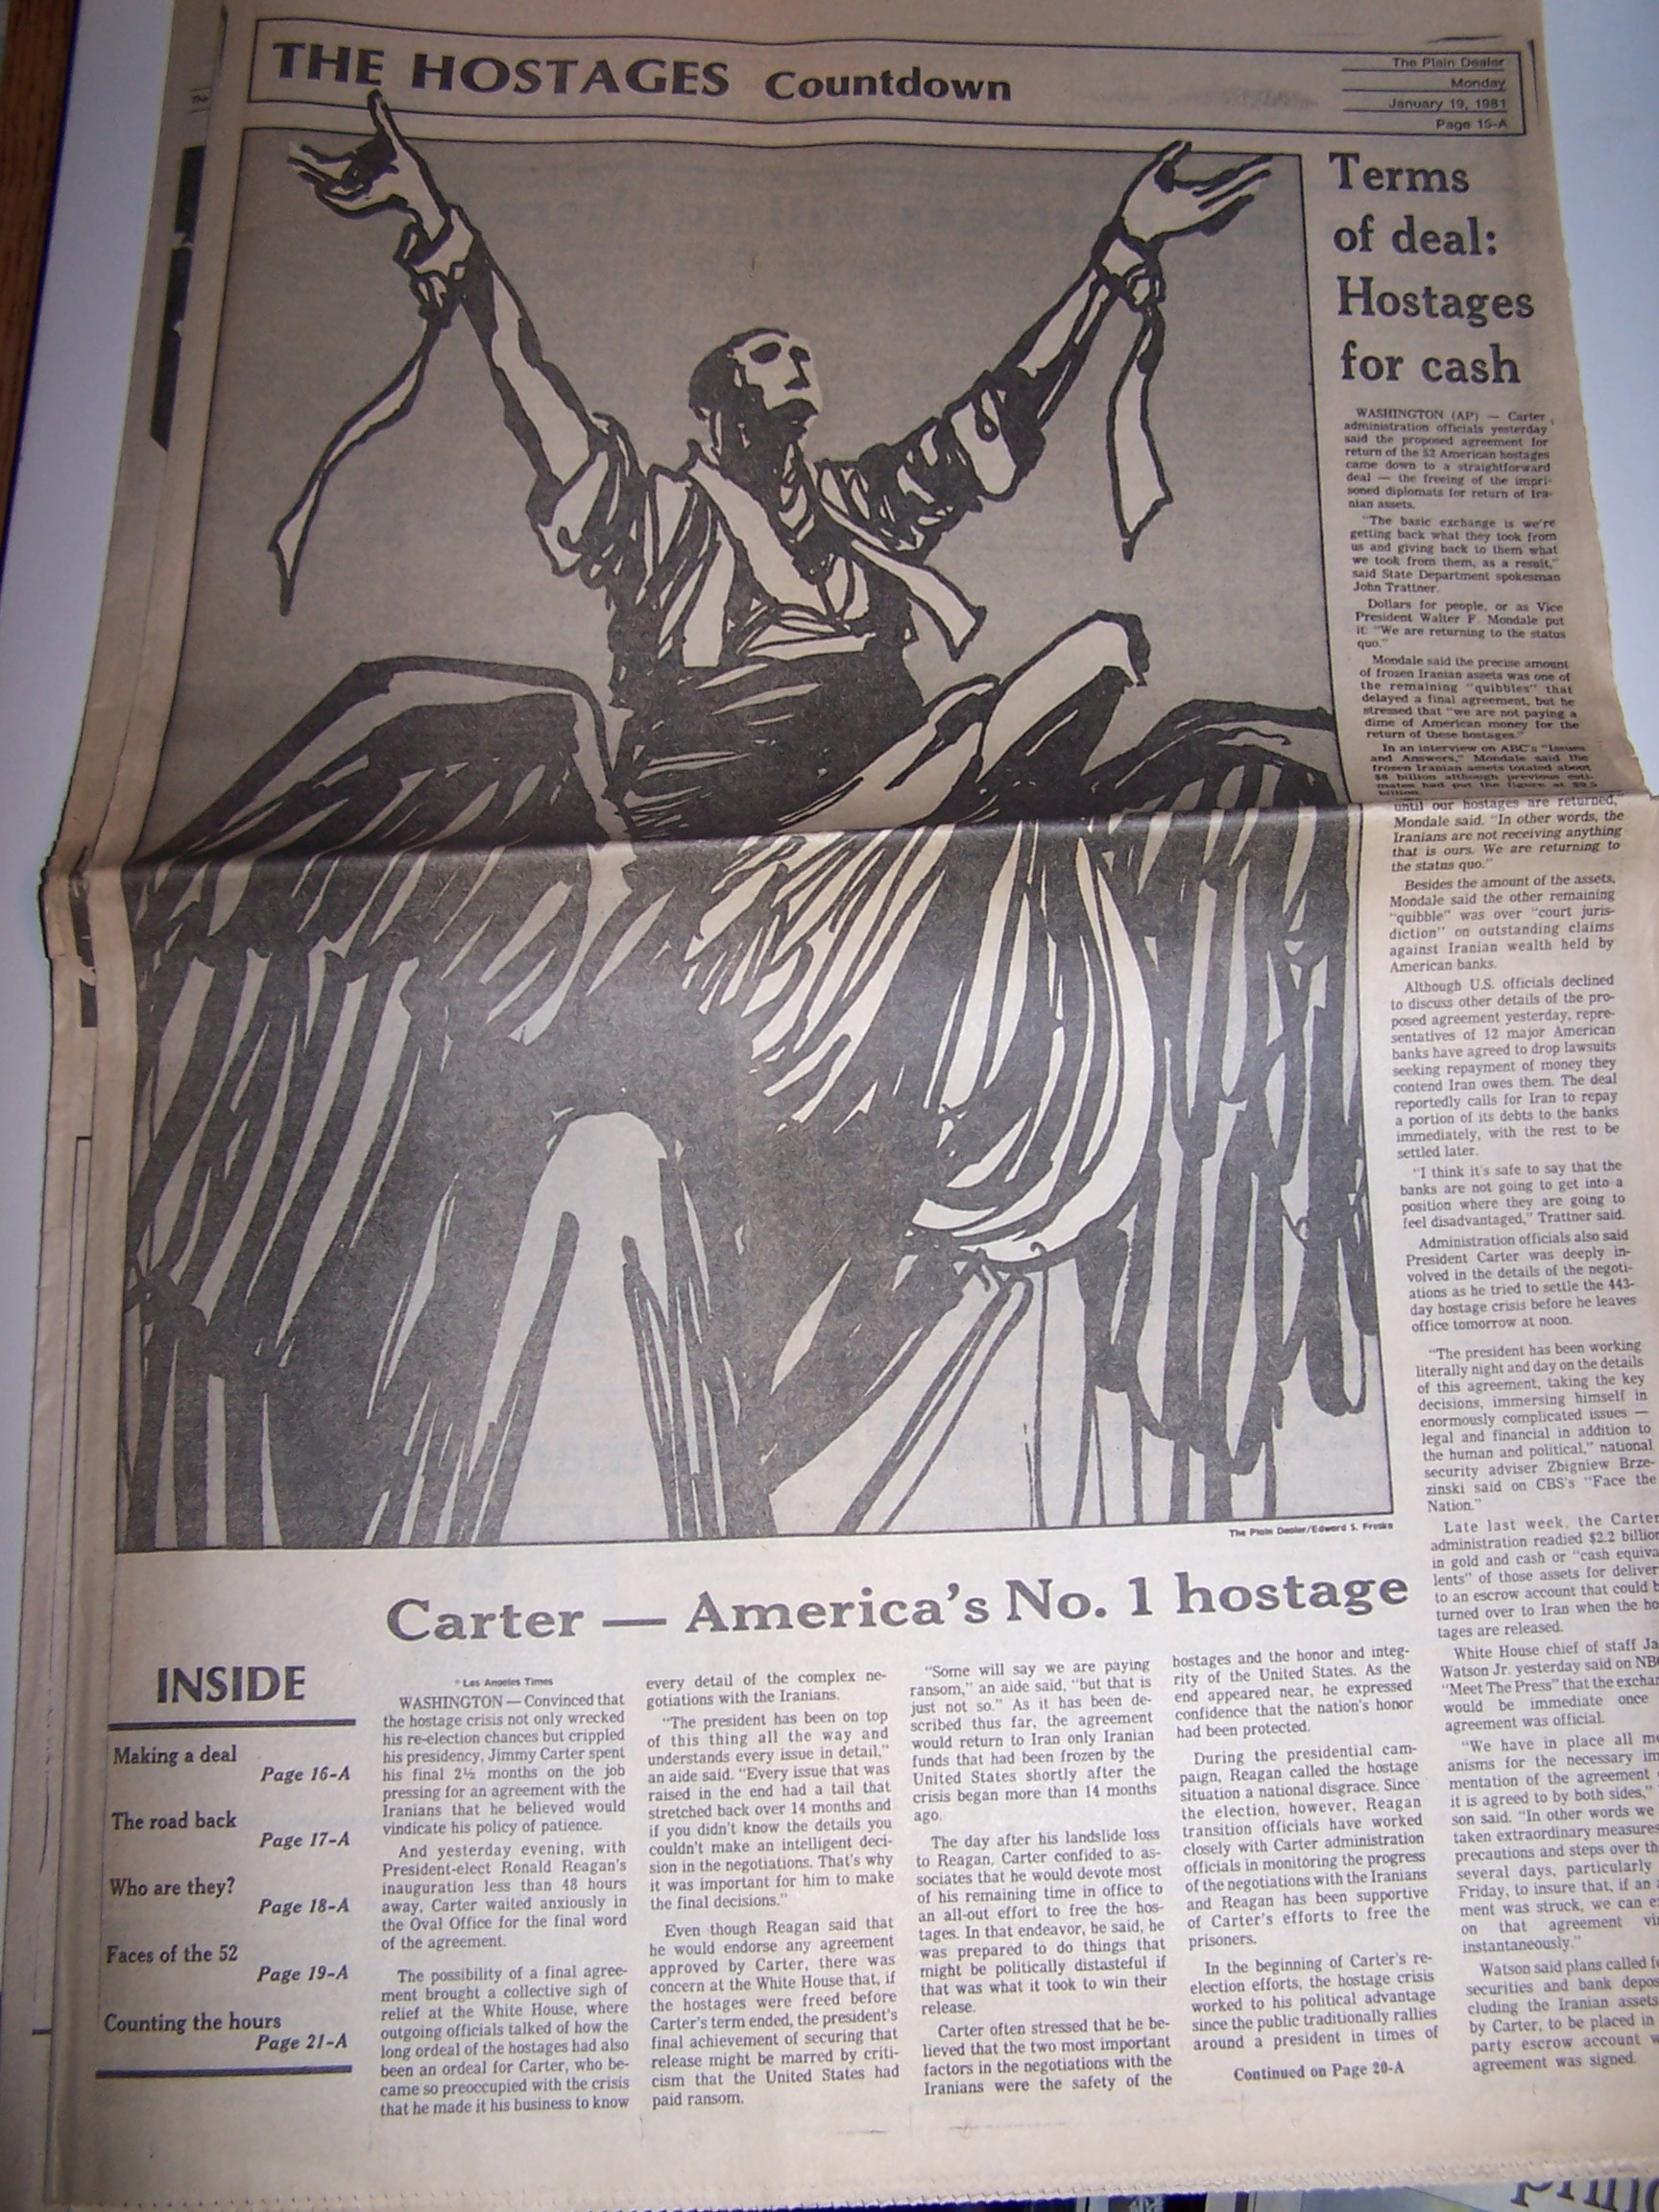 Image 2 of Iranian Hostage Crisis Newspaper, 1981, Cleveland Press